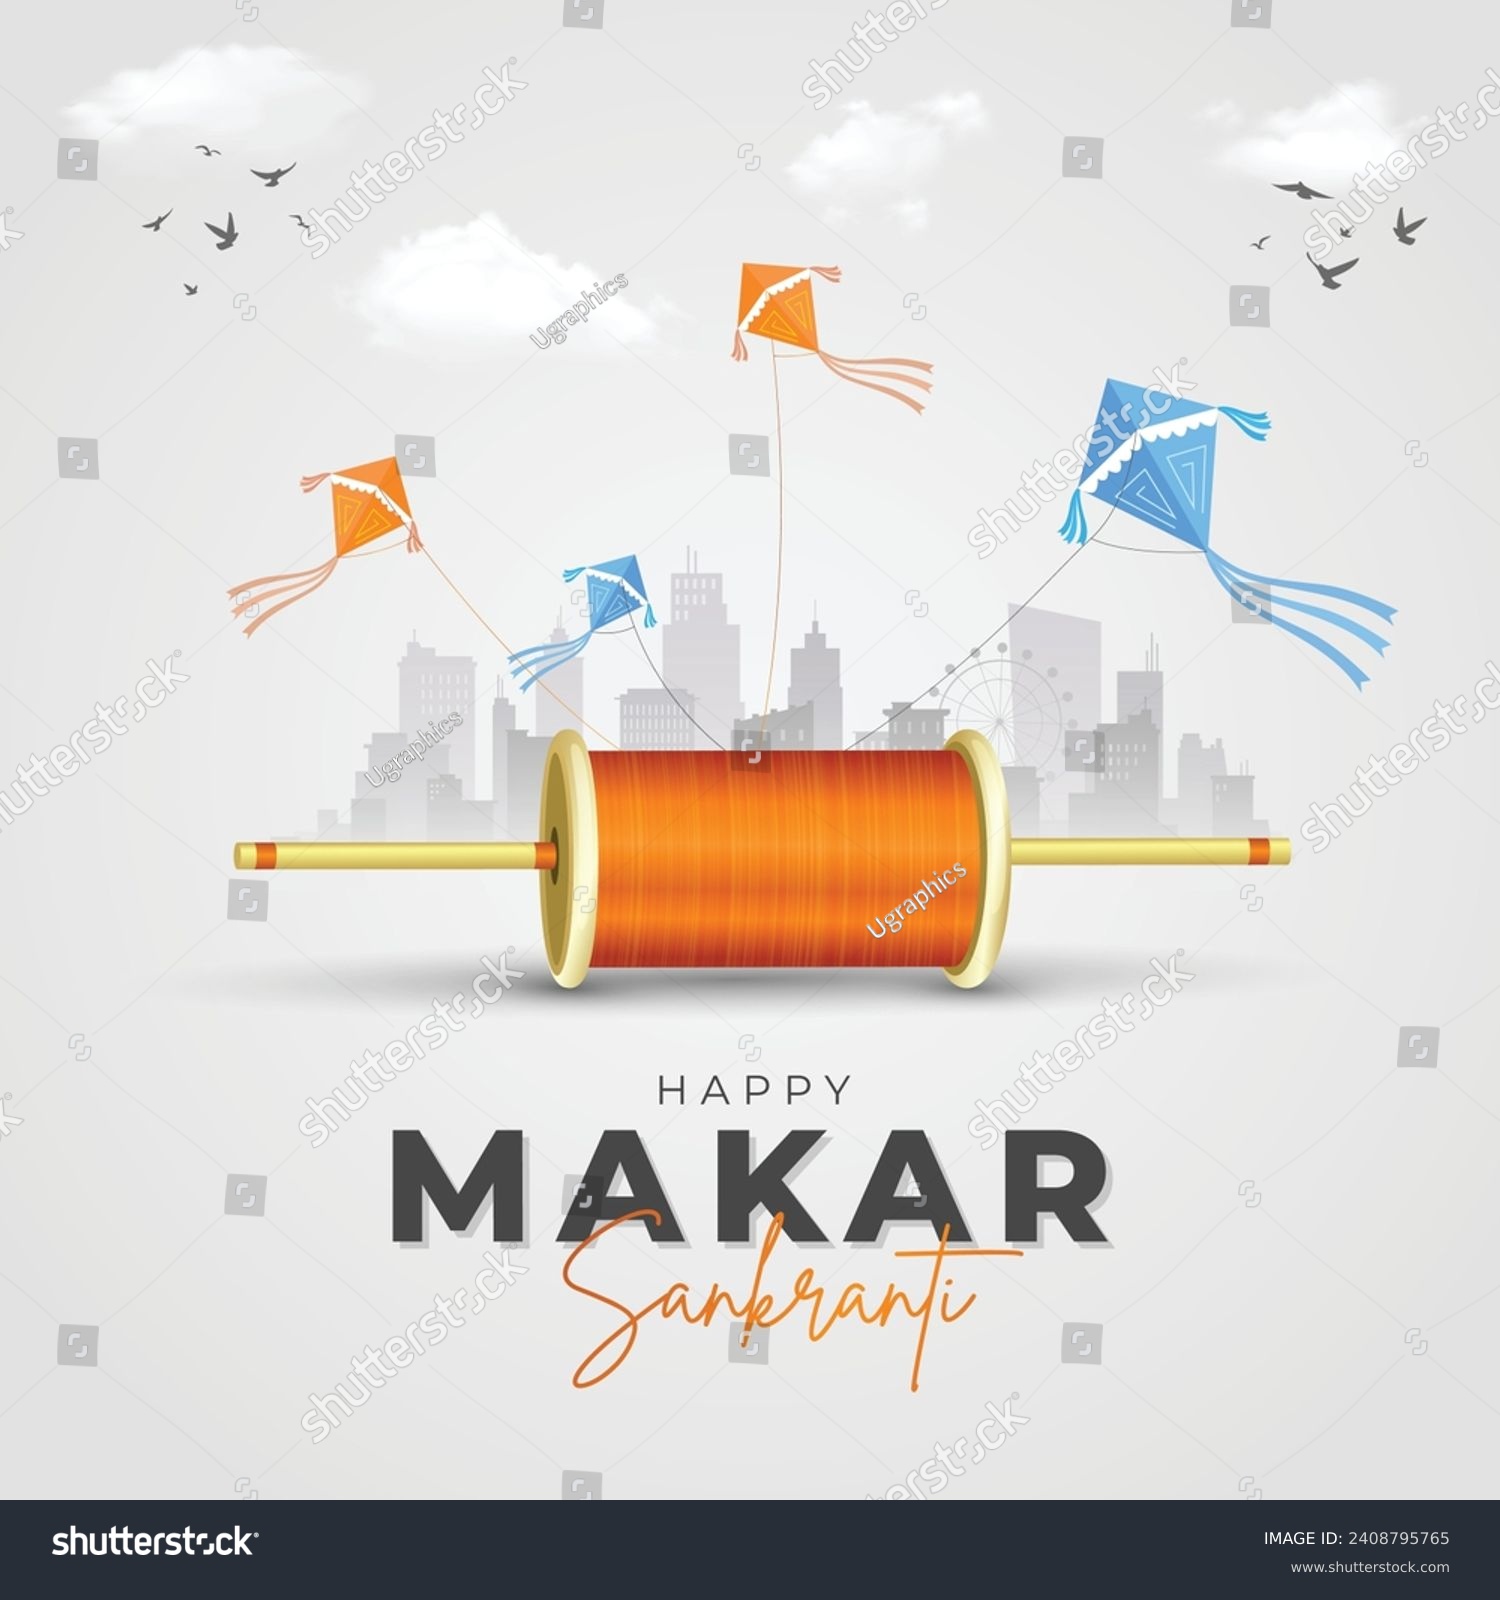 SVG of Happy Makar Sankranti Social Media Post and Greeting Card. Makar Sankranti Festival of Kites Celebration. Indian Festival Makar Sankranti Poster Background Vector Illustration svg